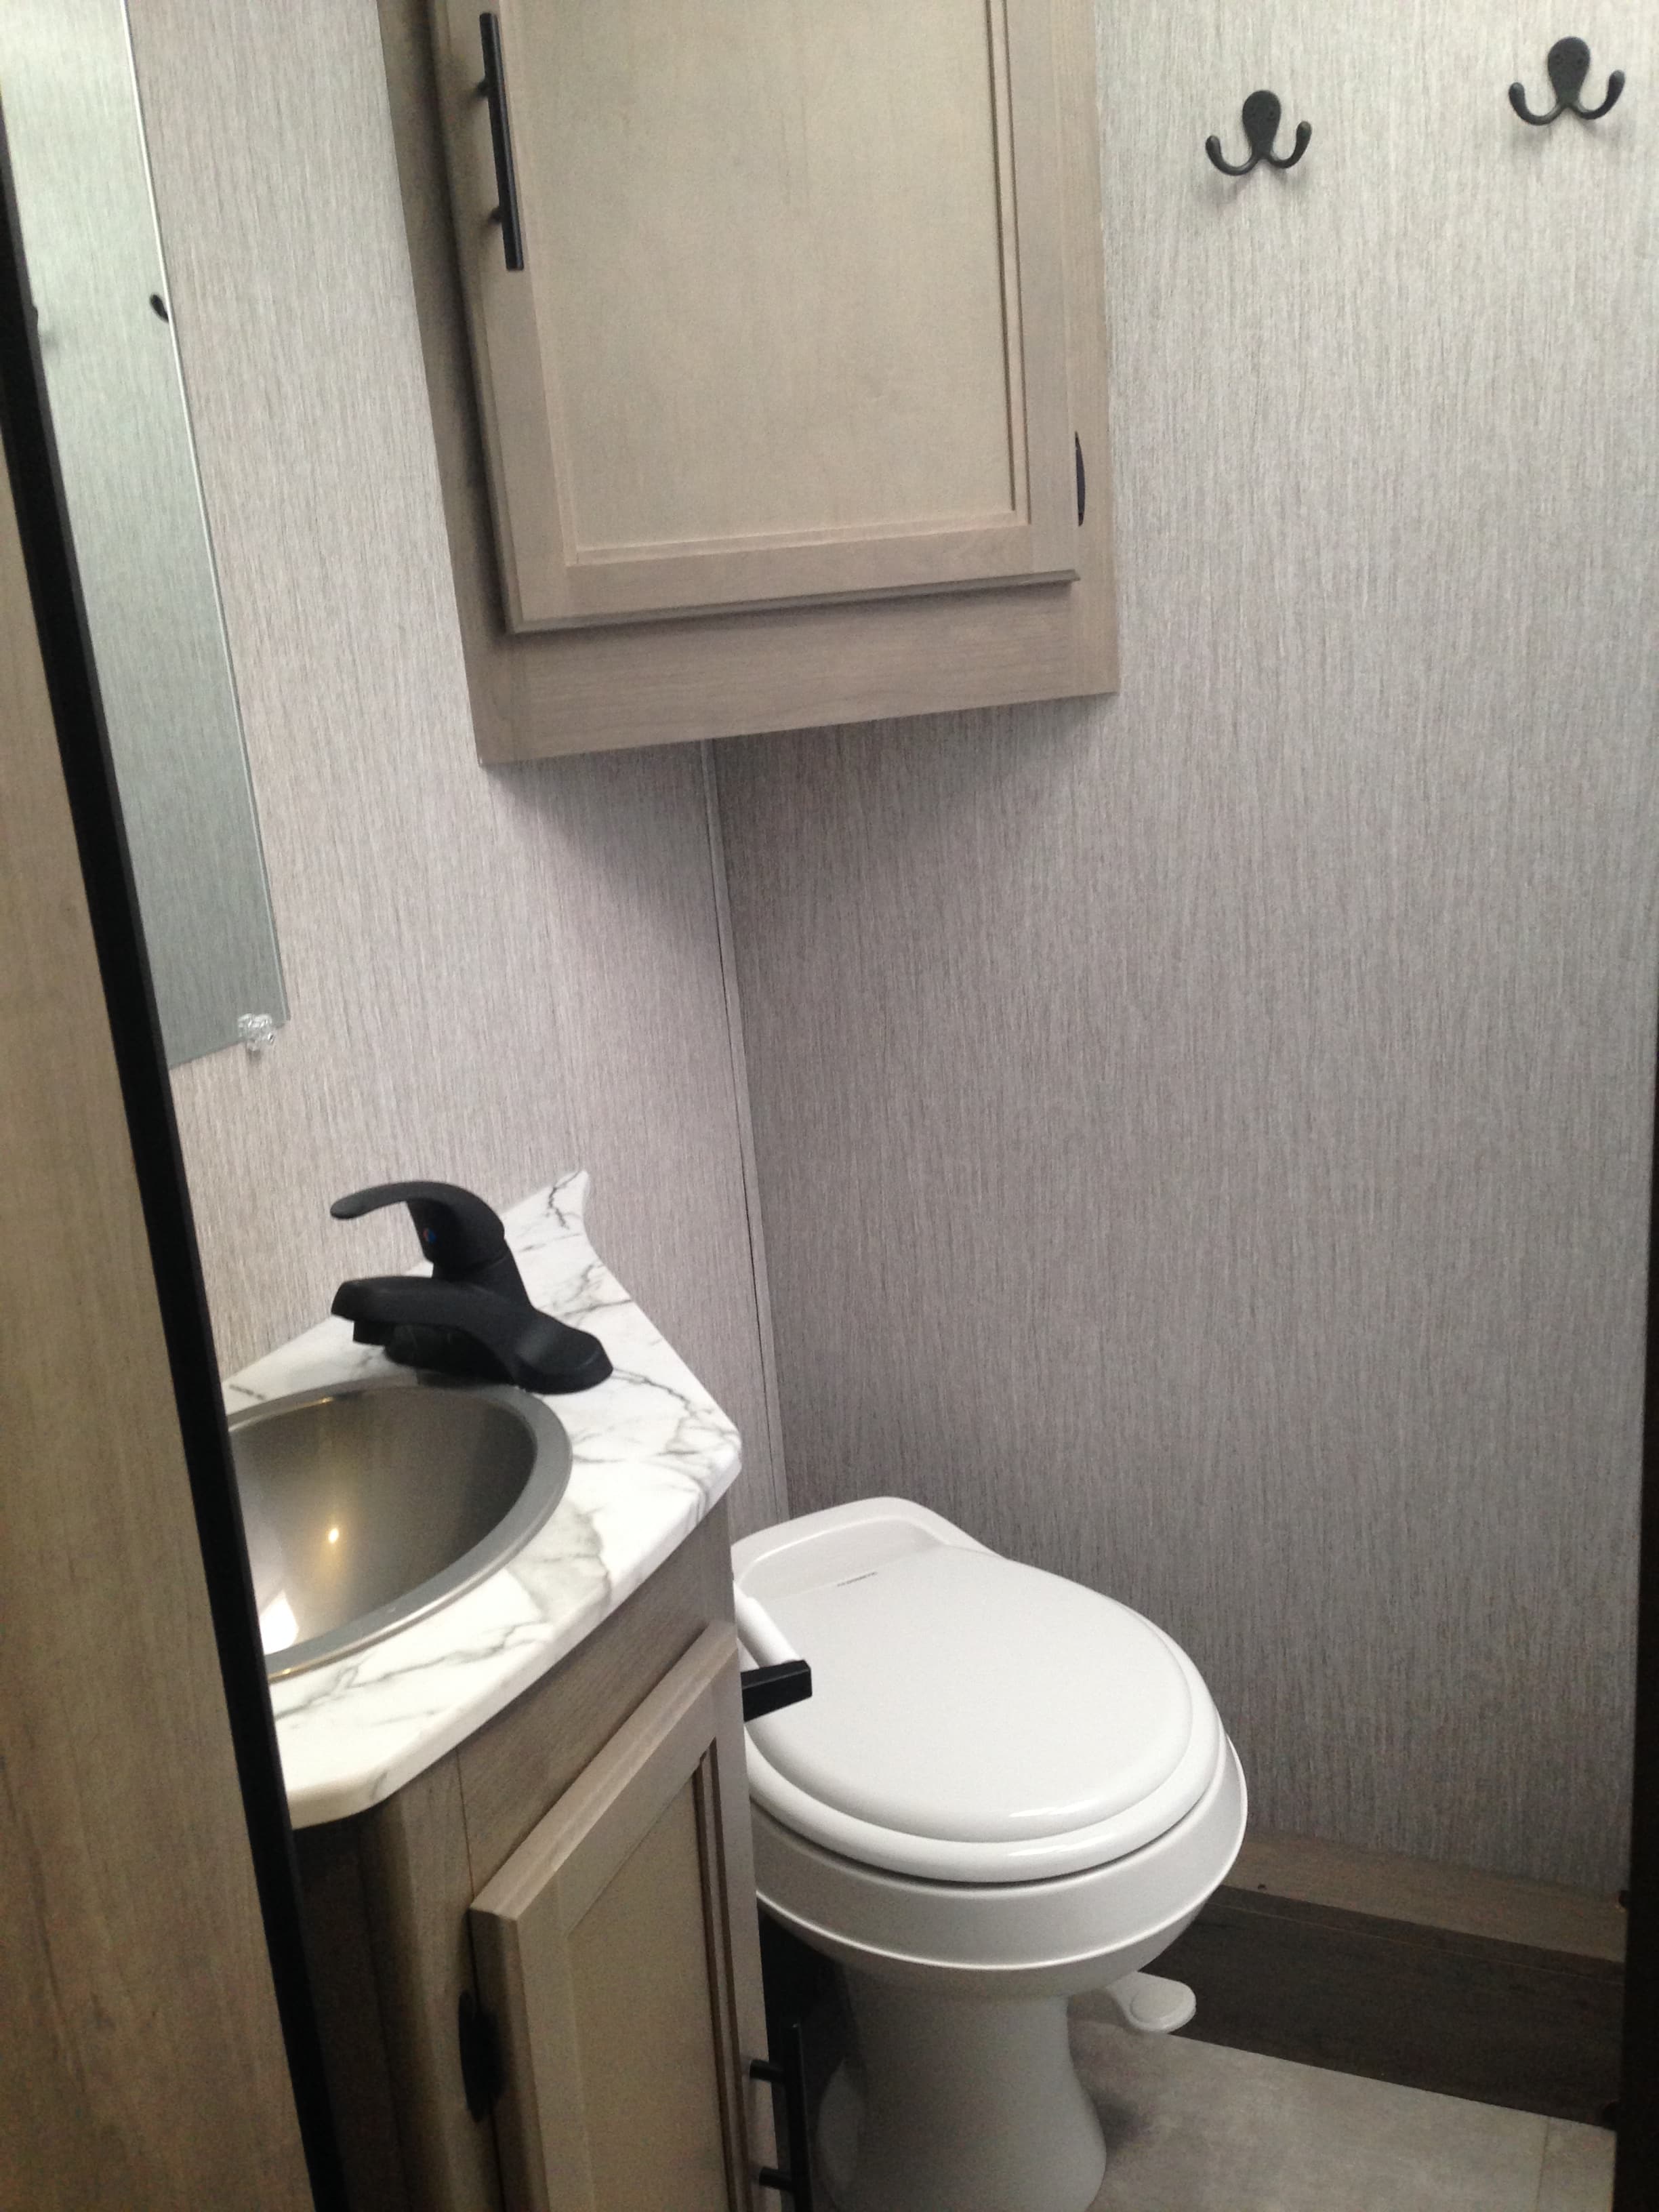 30 Bunkhouse Motorhome Rental PA Bathroom